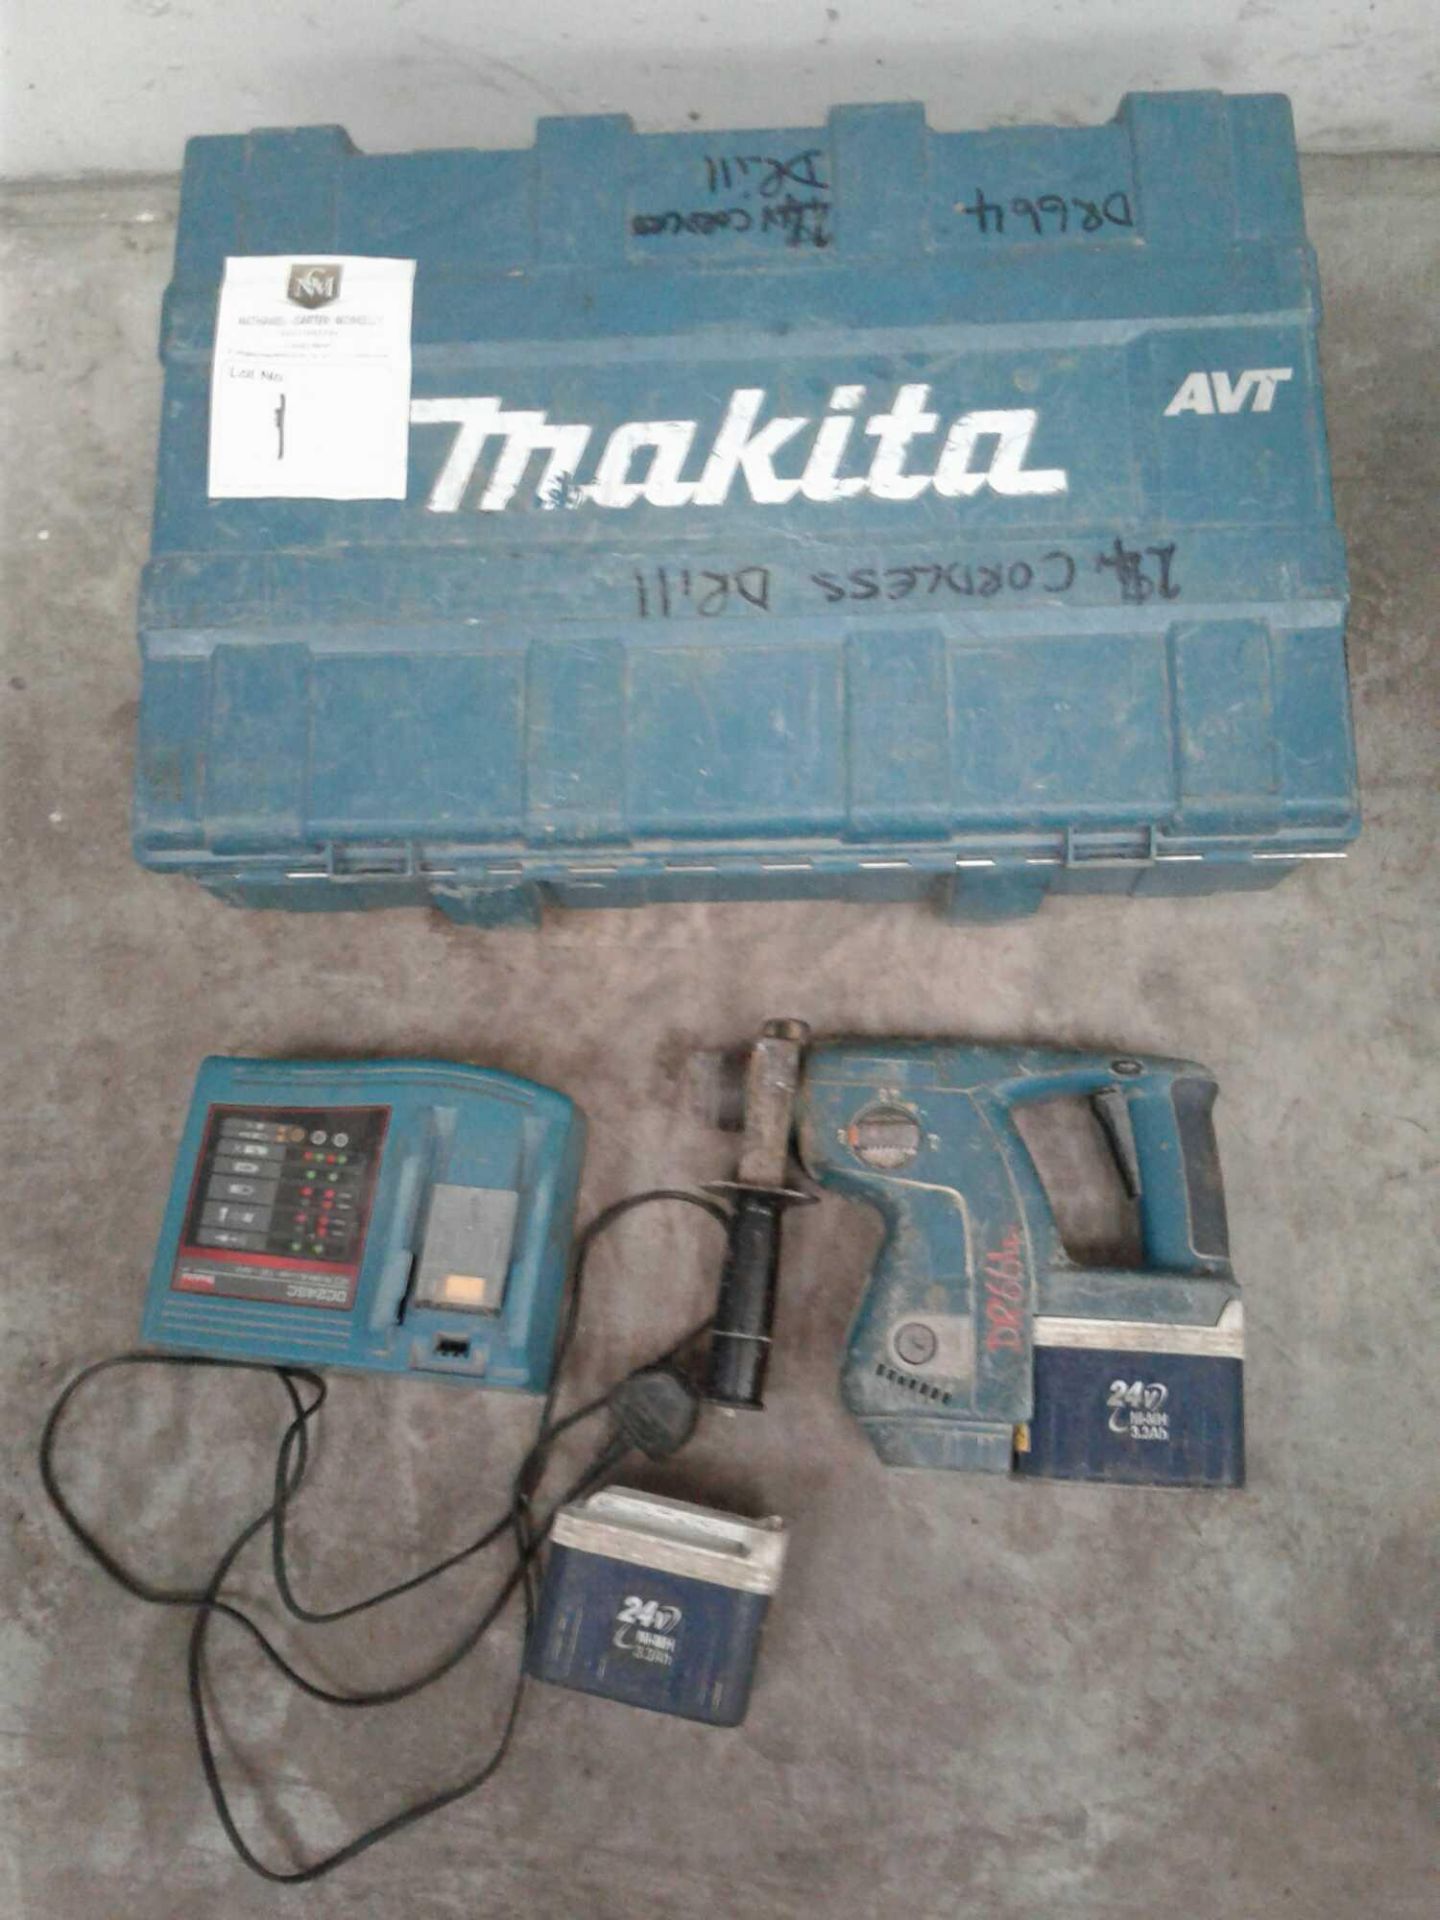 Makita cordless drill 24-volt